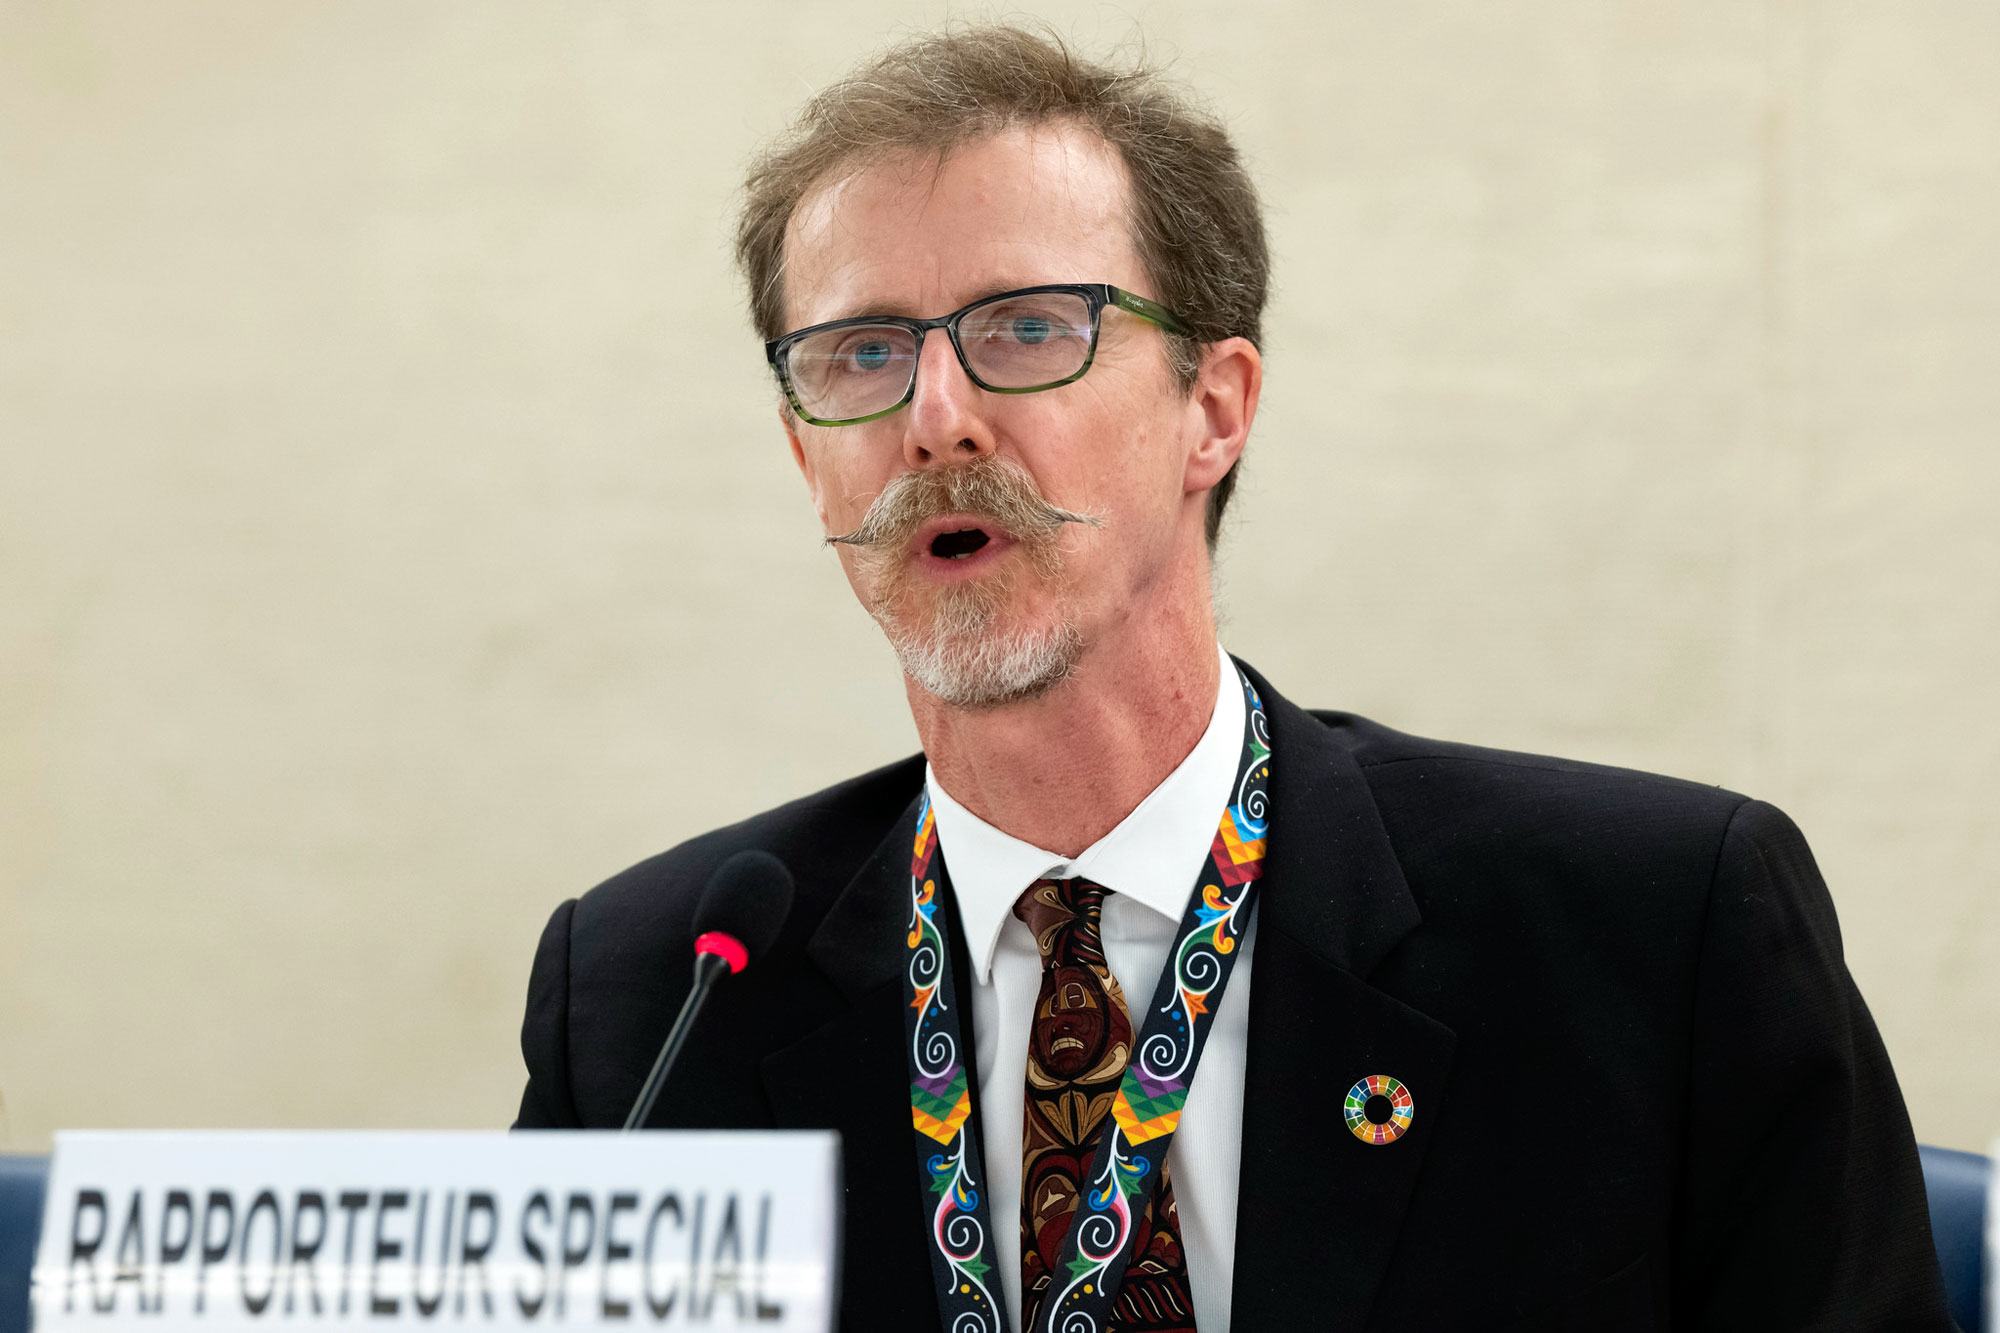 David Boyd, Pelapor Khusus untuk Hak Asasi Manusia dan Lingkungan.